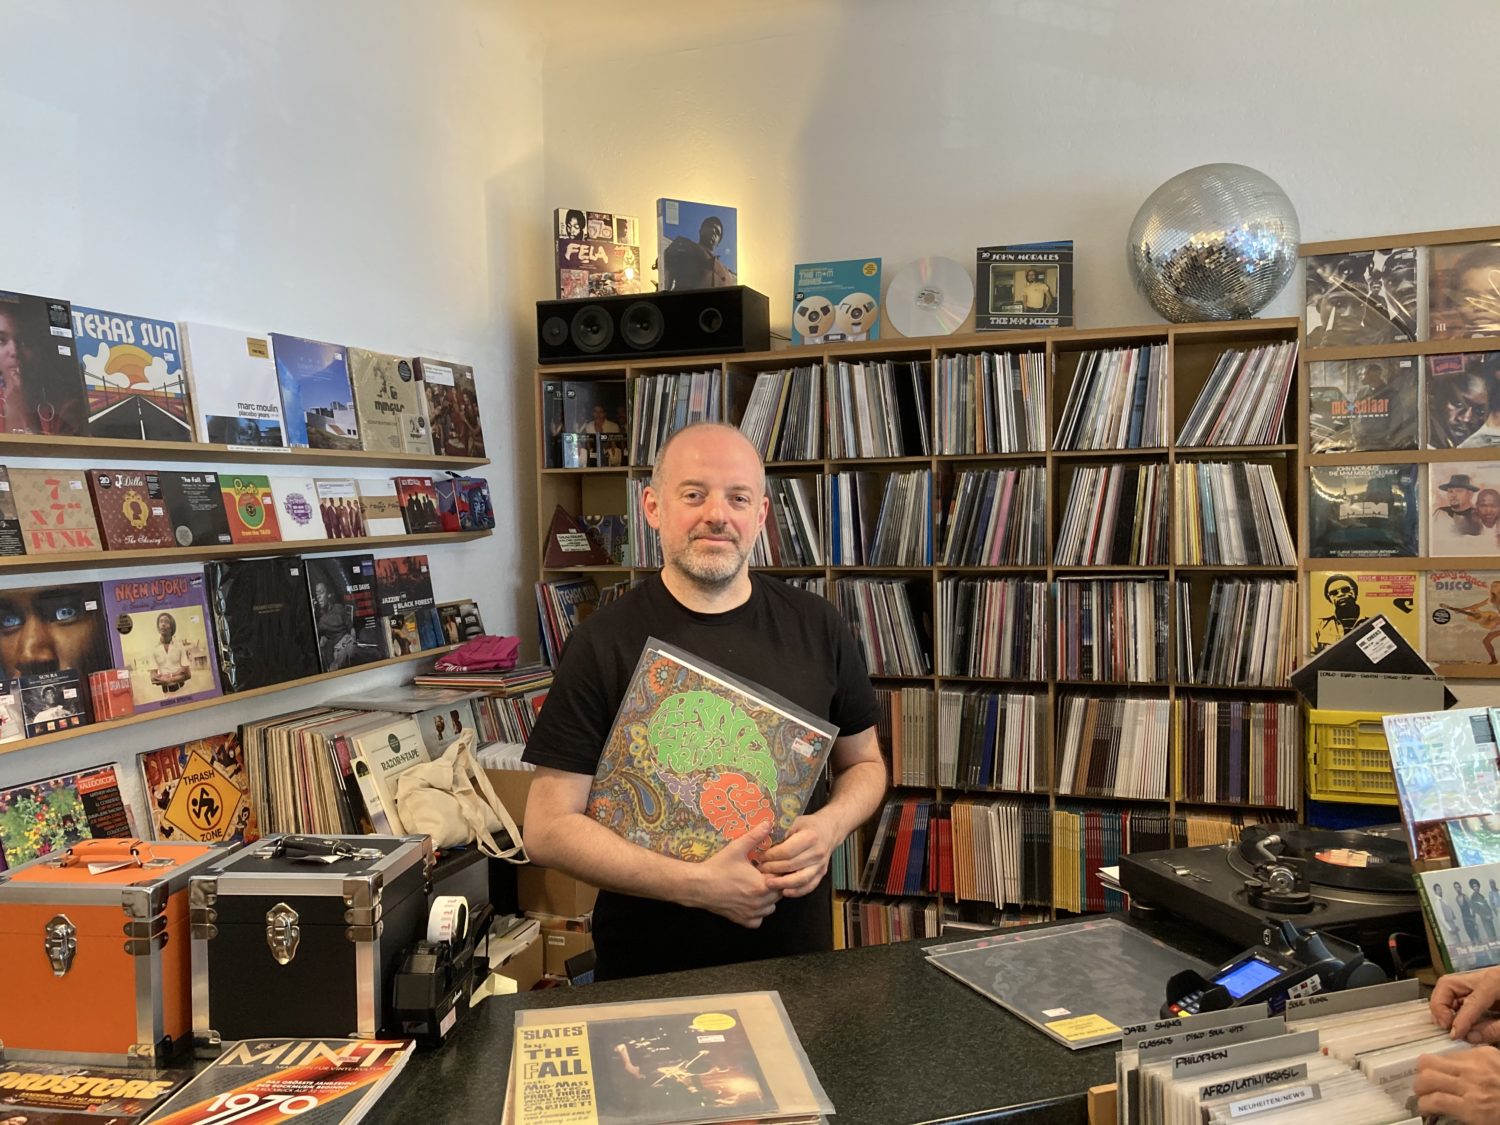 Plattenladen Soultrade in Neukölln Record Store Day 2020 in Berlin